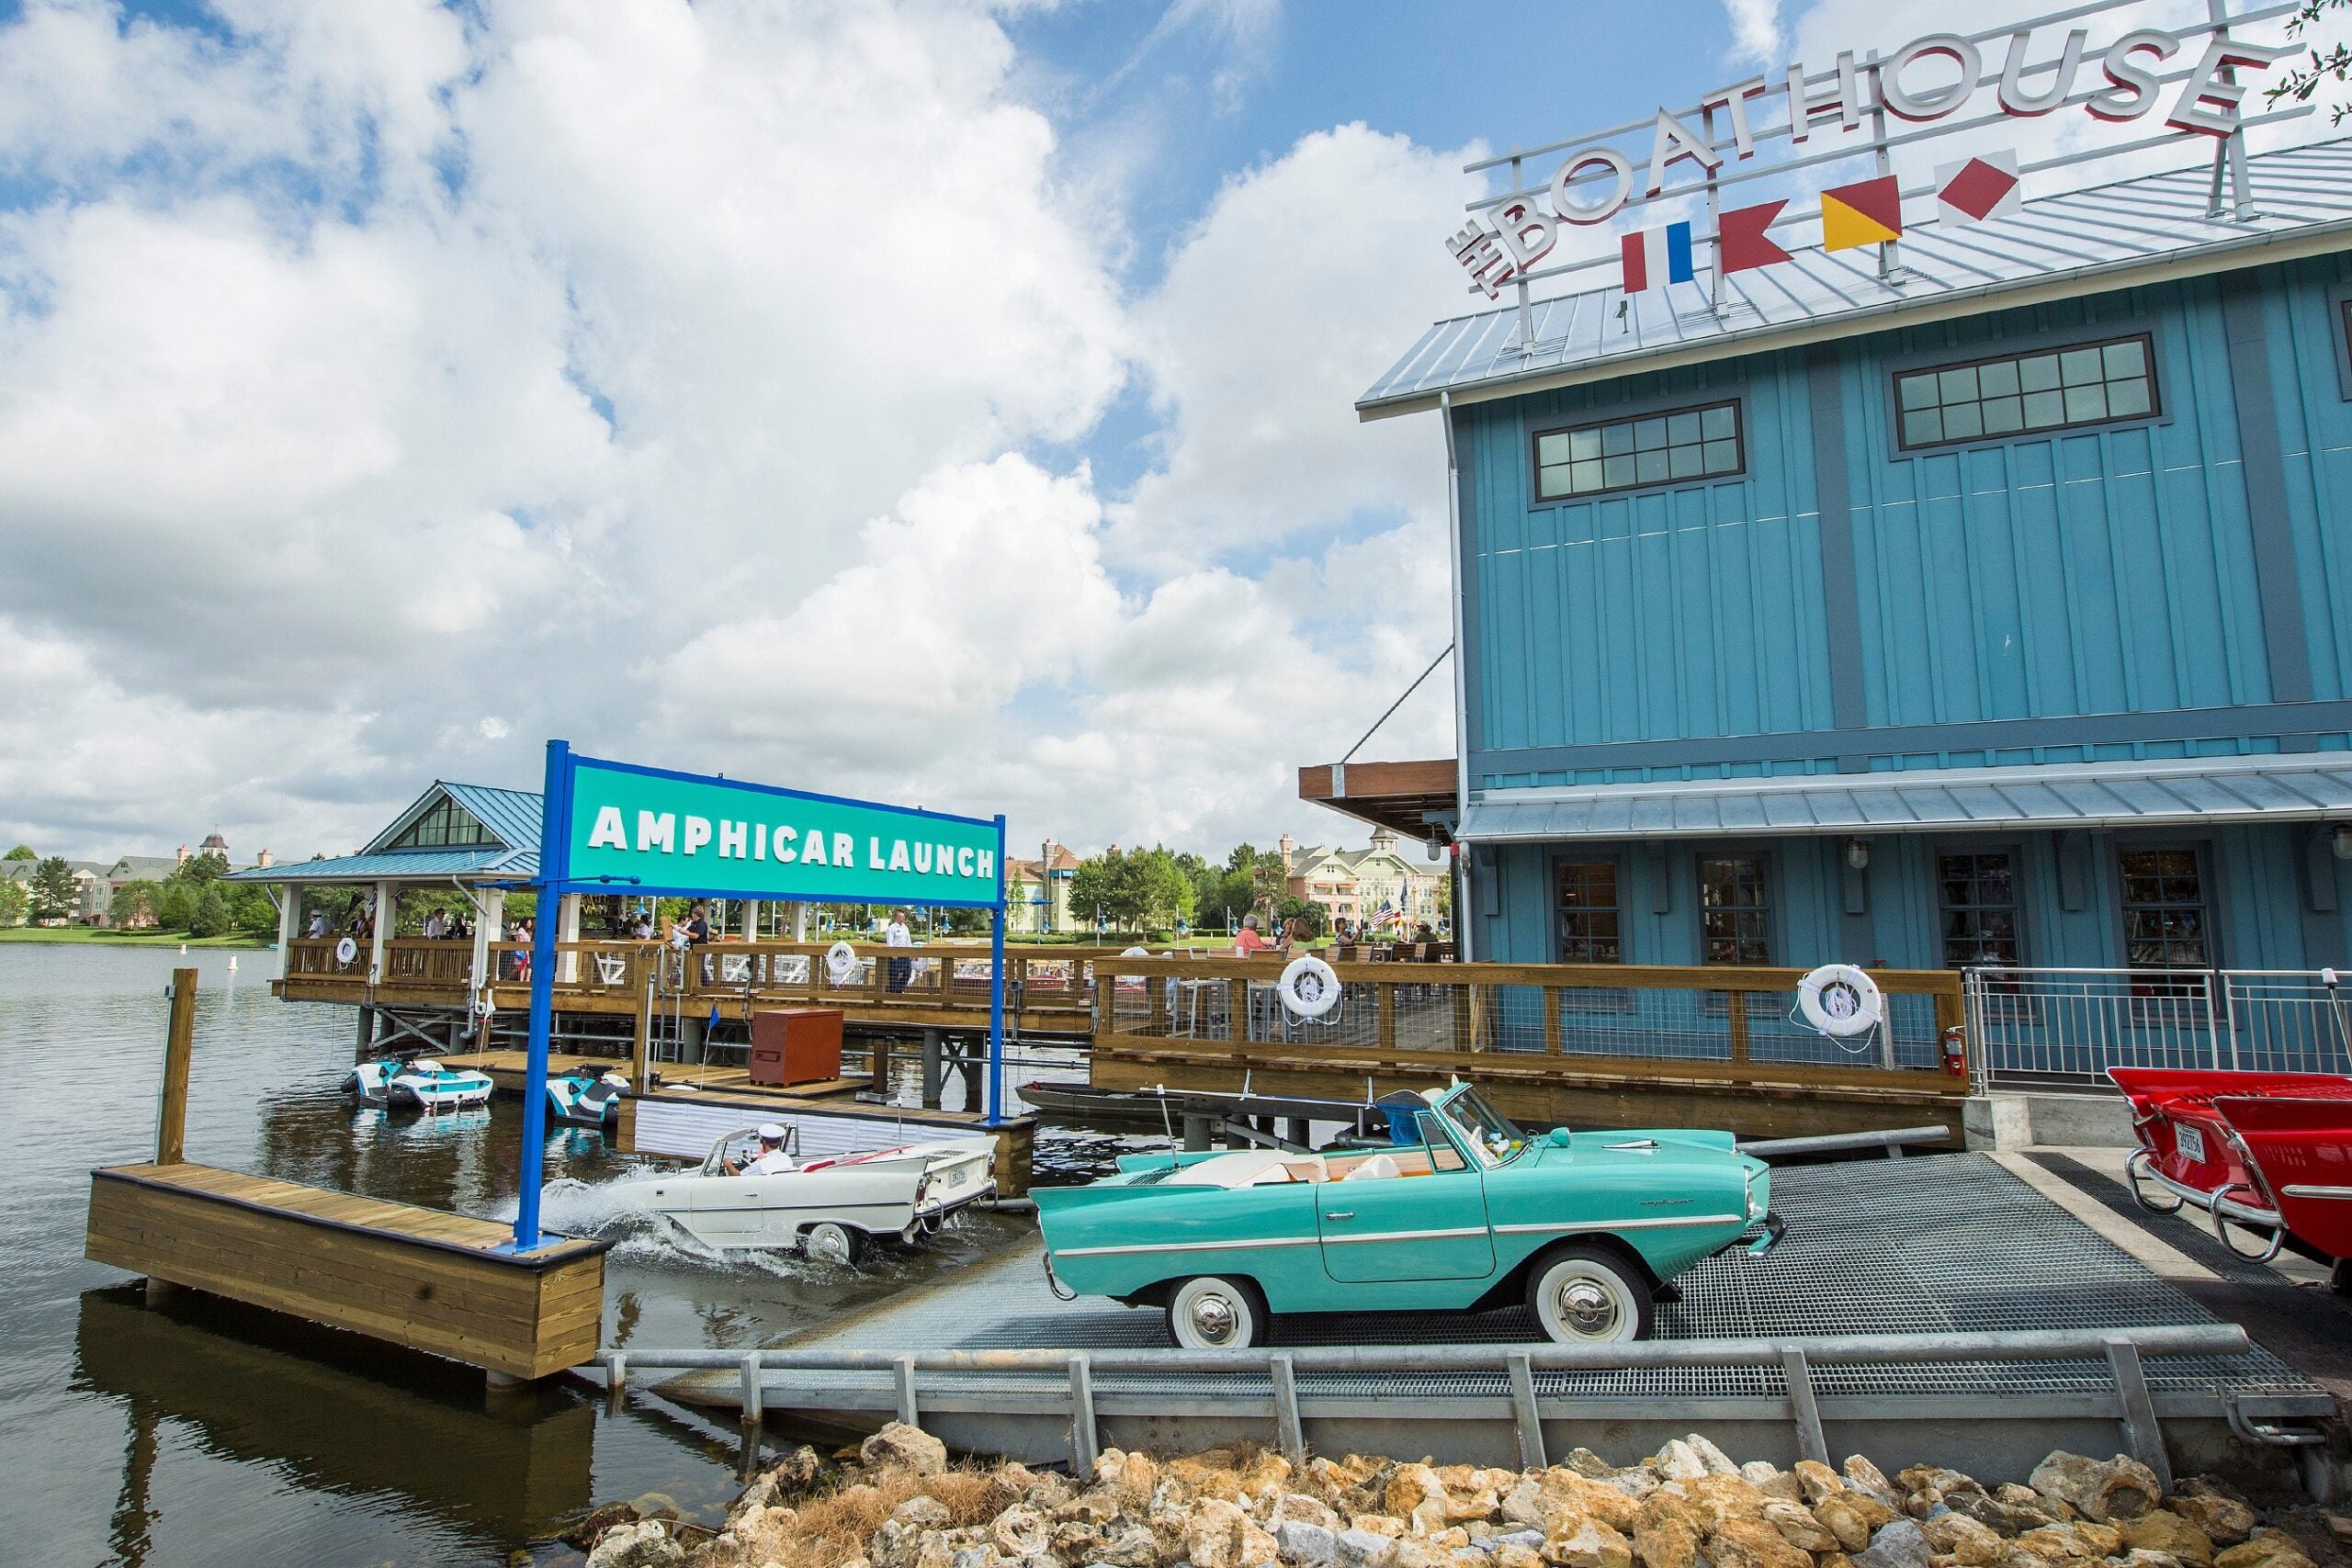 Amphicar launch near Disney's Boathouse Restaurant